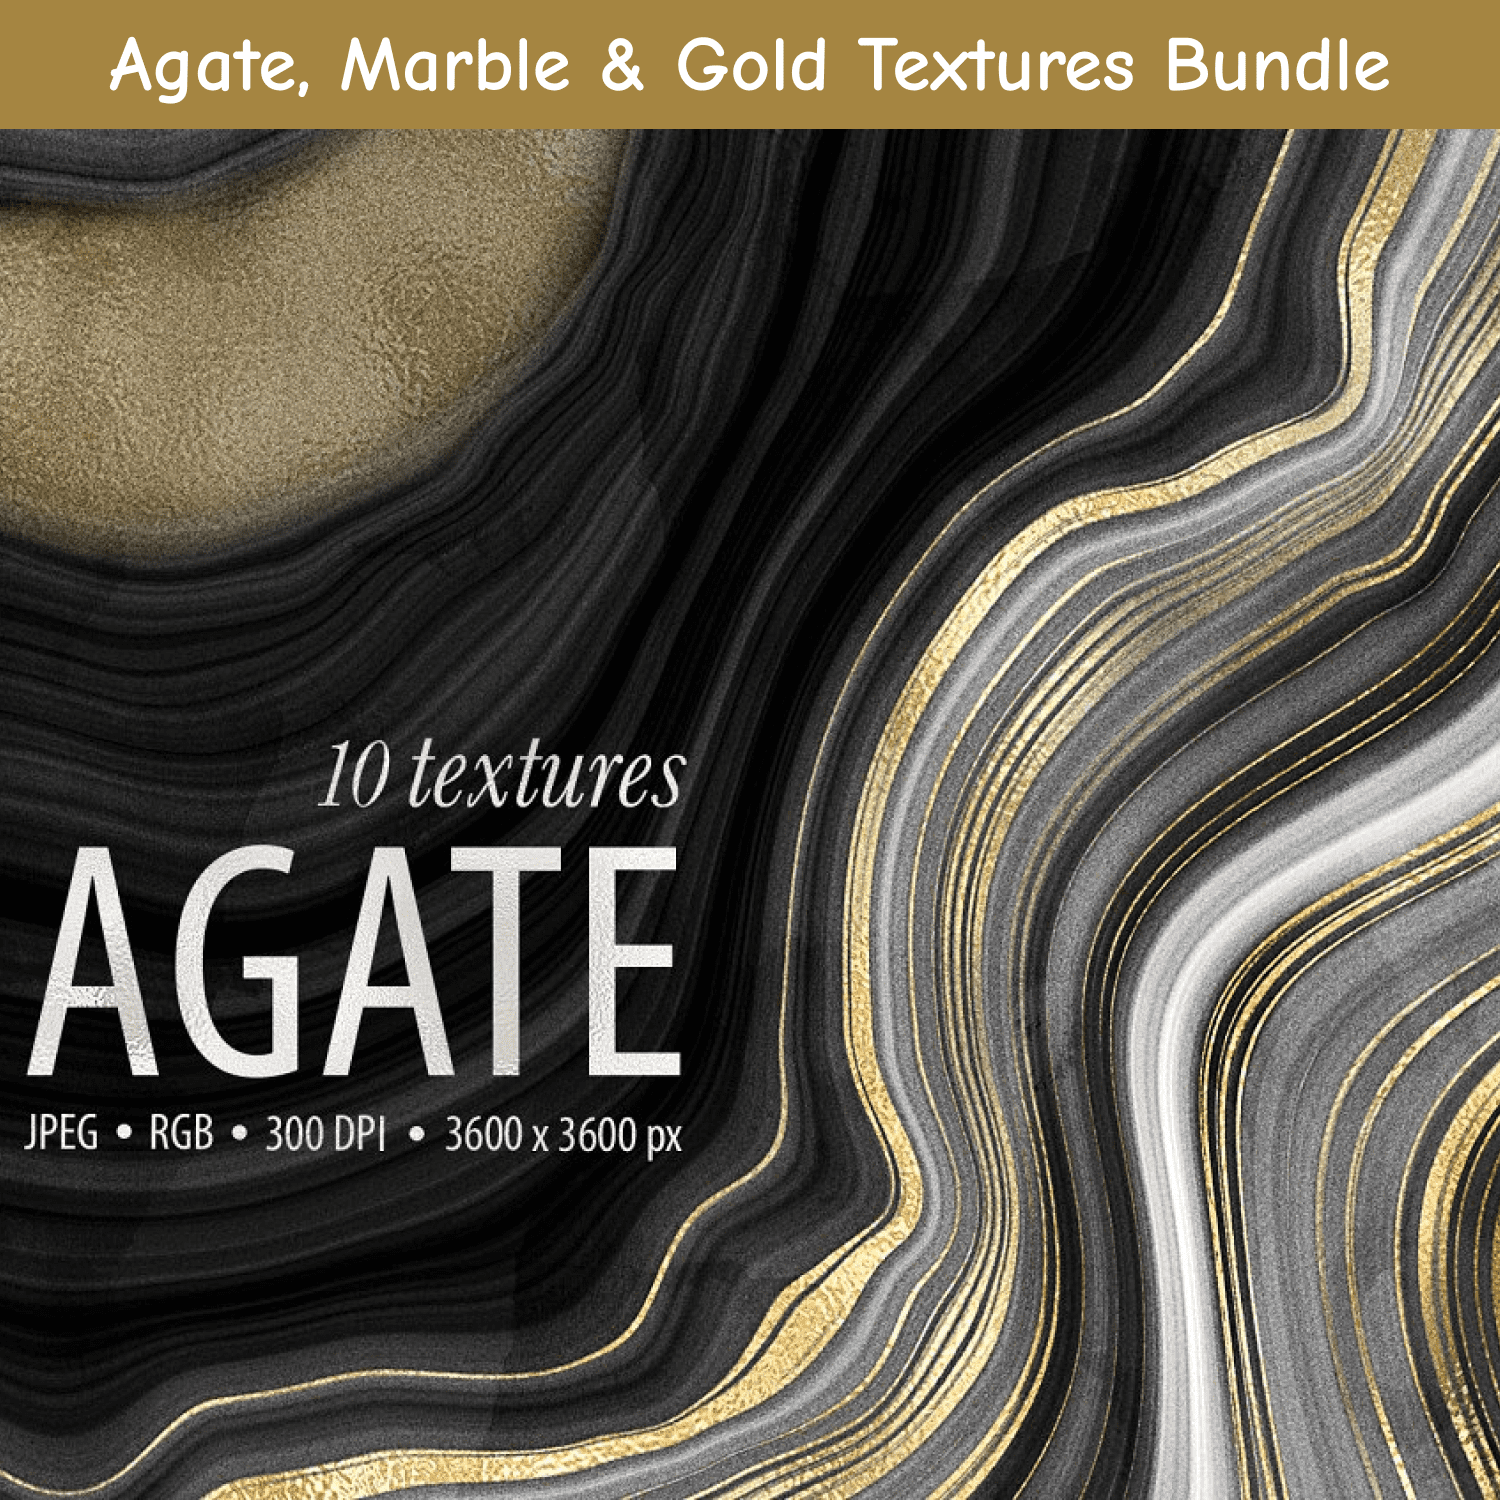 Agate, Marble & Gold Textures Bundle.